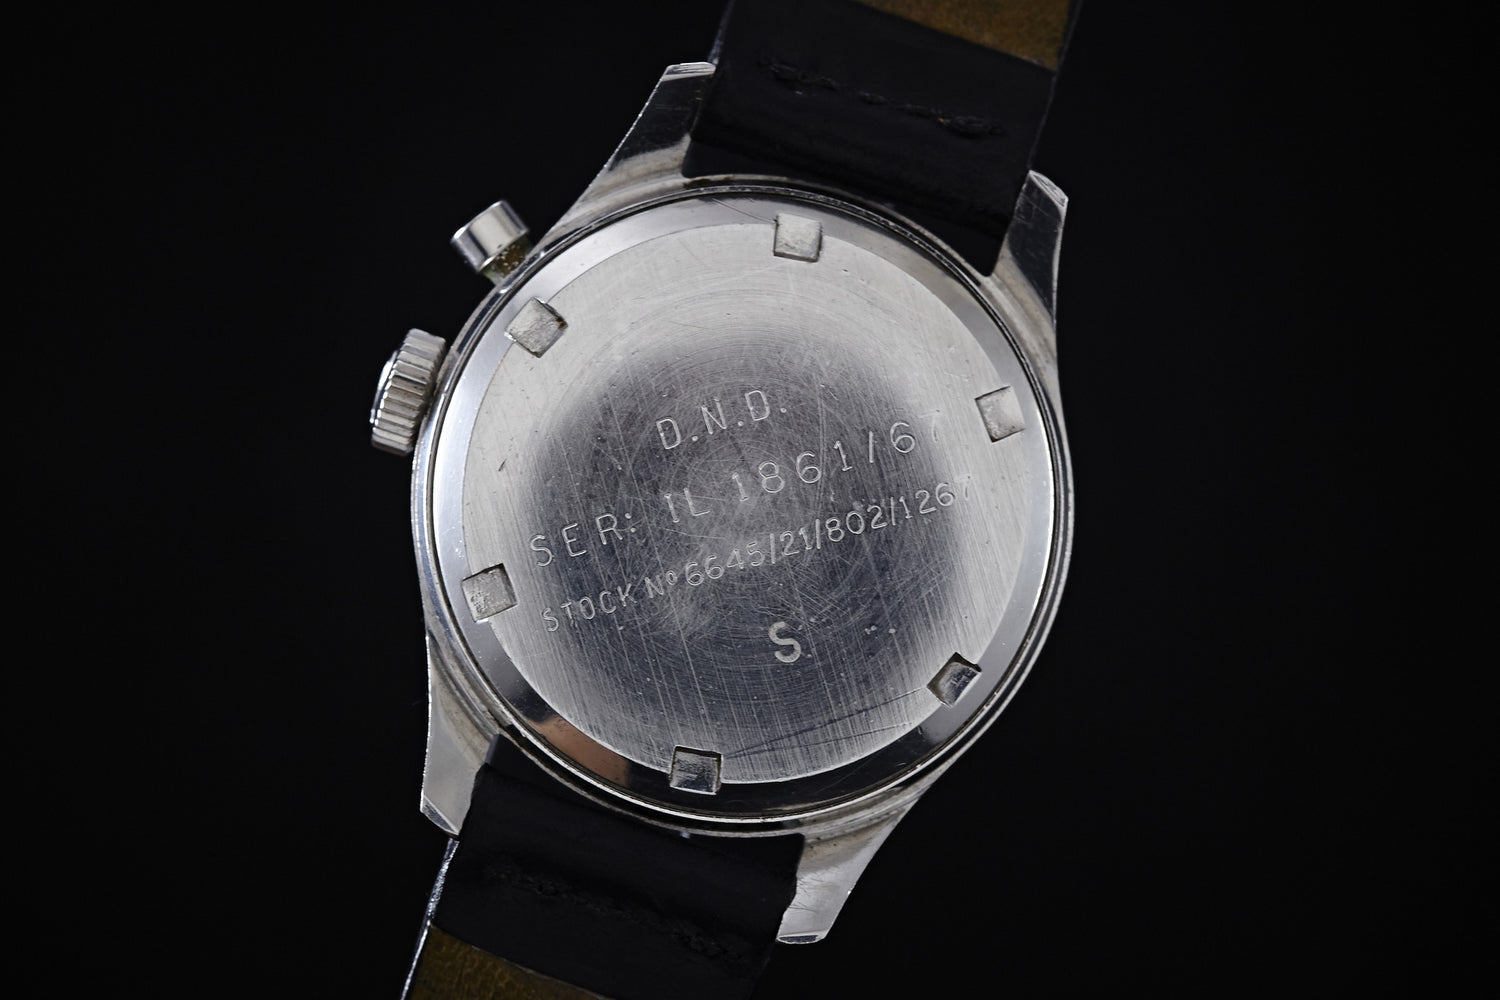 DND (Canadian Department of National Defense) Breitling Vintage Chronograph Case Back (DND) Department of National Defense